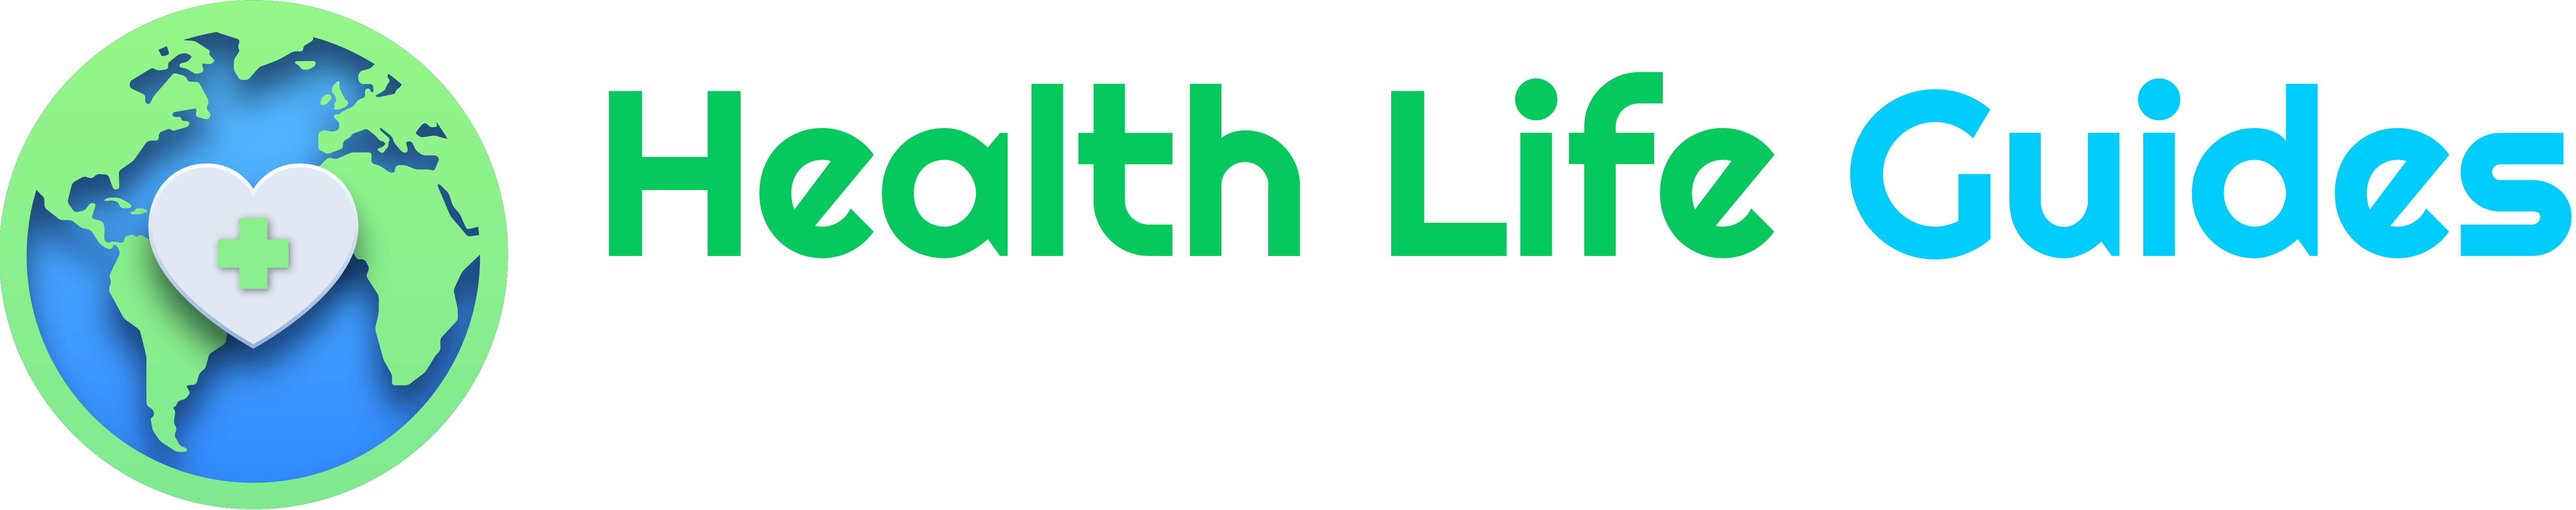 Health Life Guides Logo